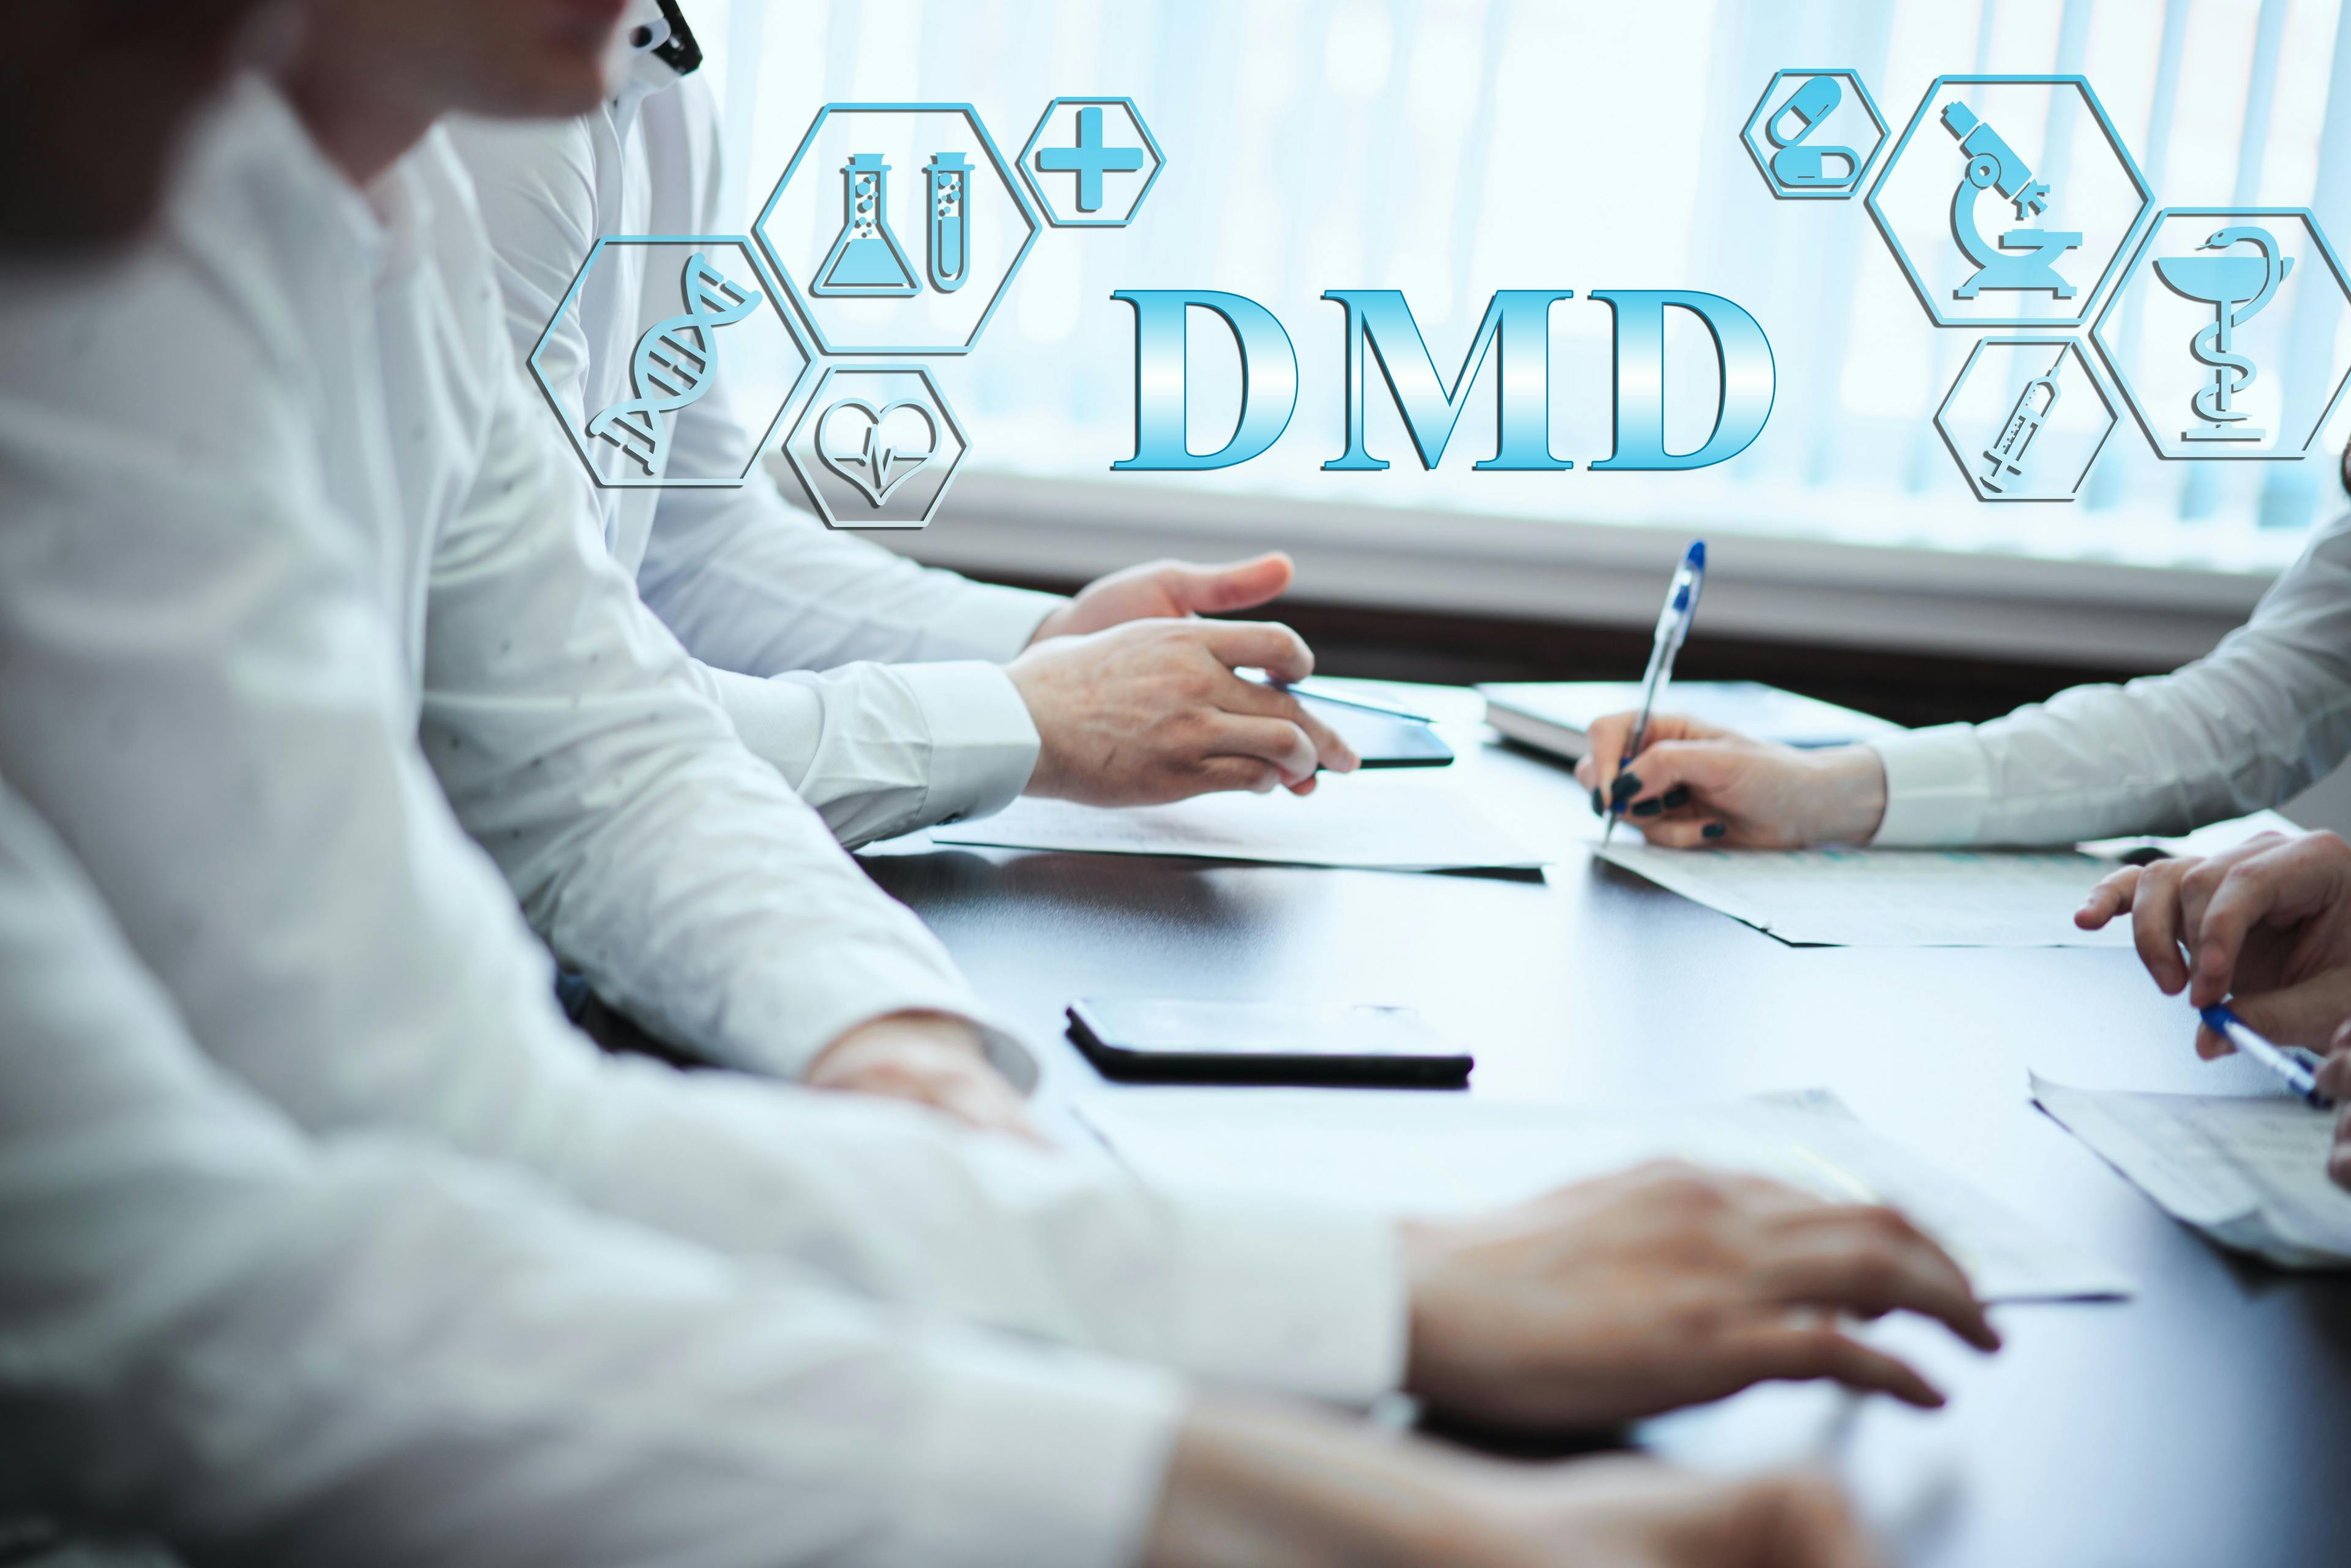 Doctors planning DMD treatment | Image Credit: OlegKachura - stock.adobe.com